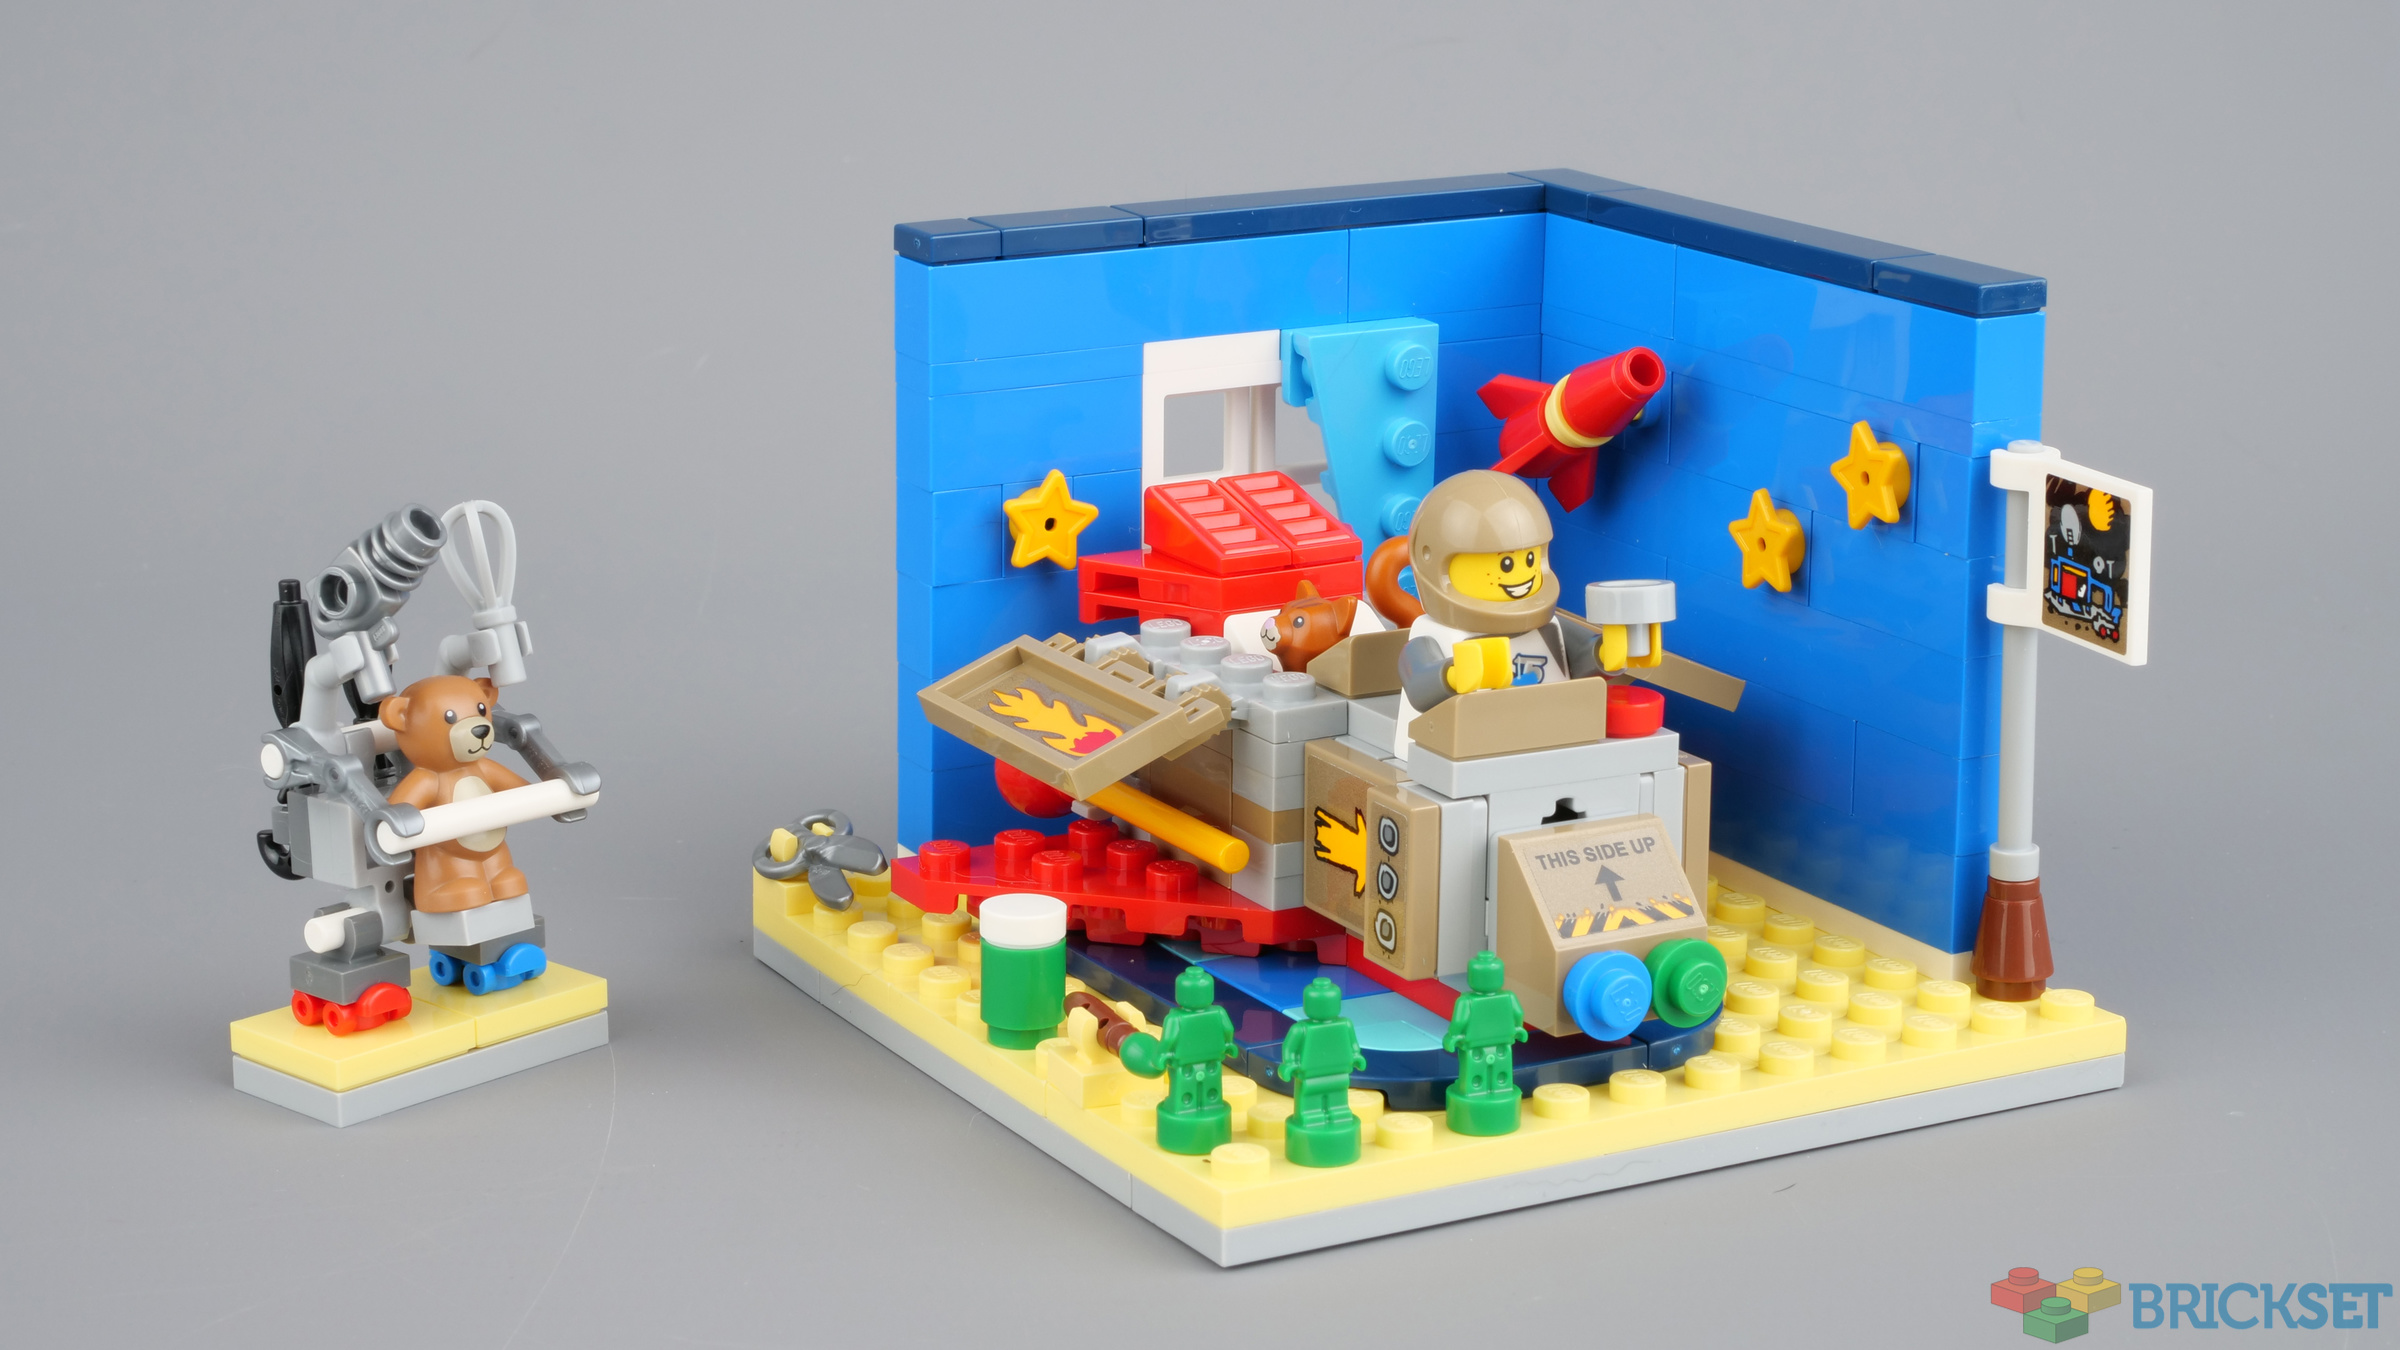 40533 Cosmic Cardboard Adventures | Brickset: LEGO set guide and database